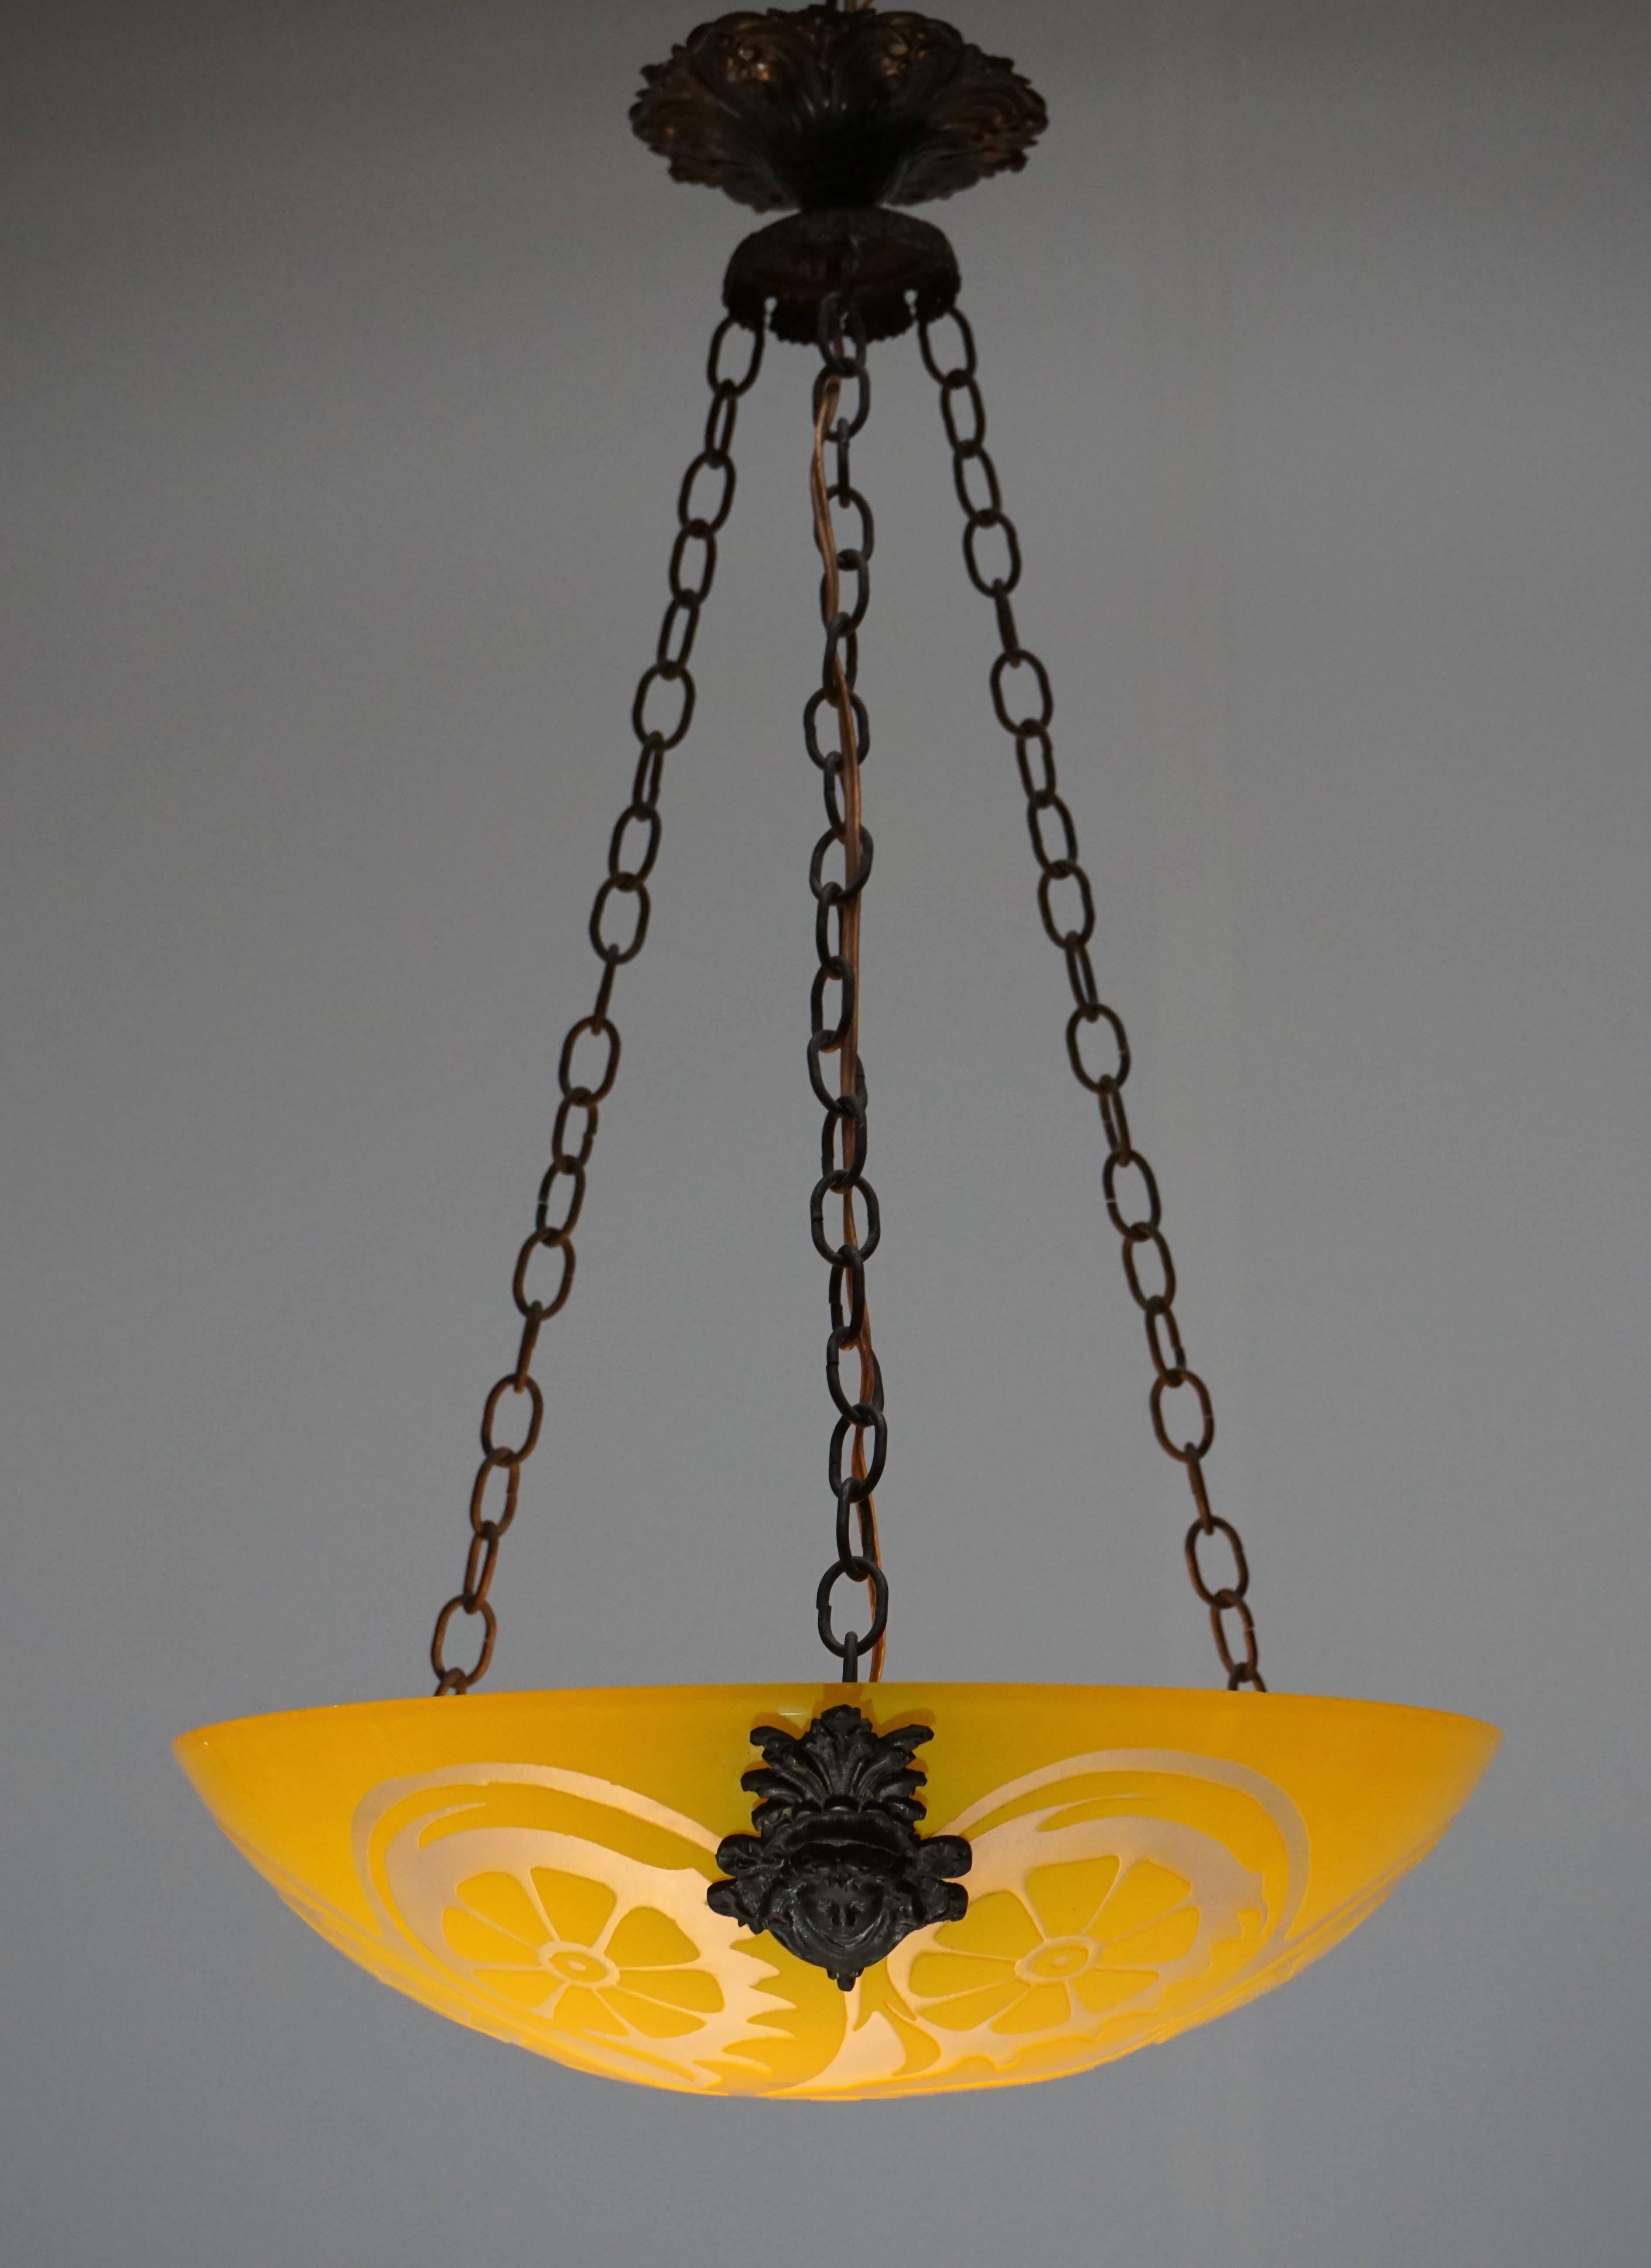 Art Deco glass and brass pendant light.
Measures: Diameter:35 cm.
Height:55 cm.
One E27 bulb.